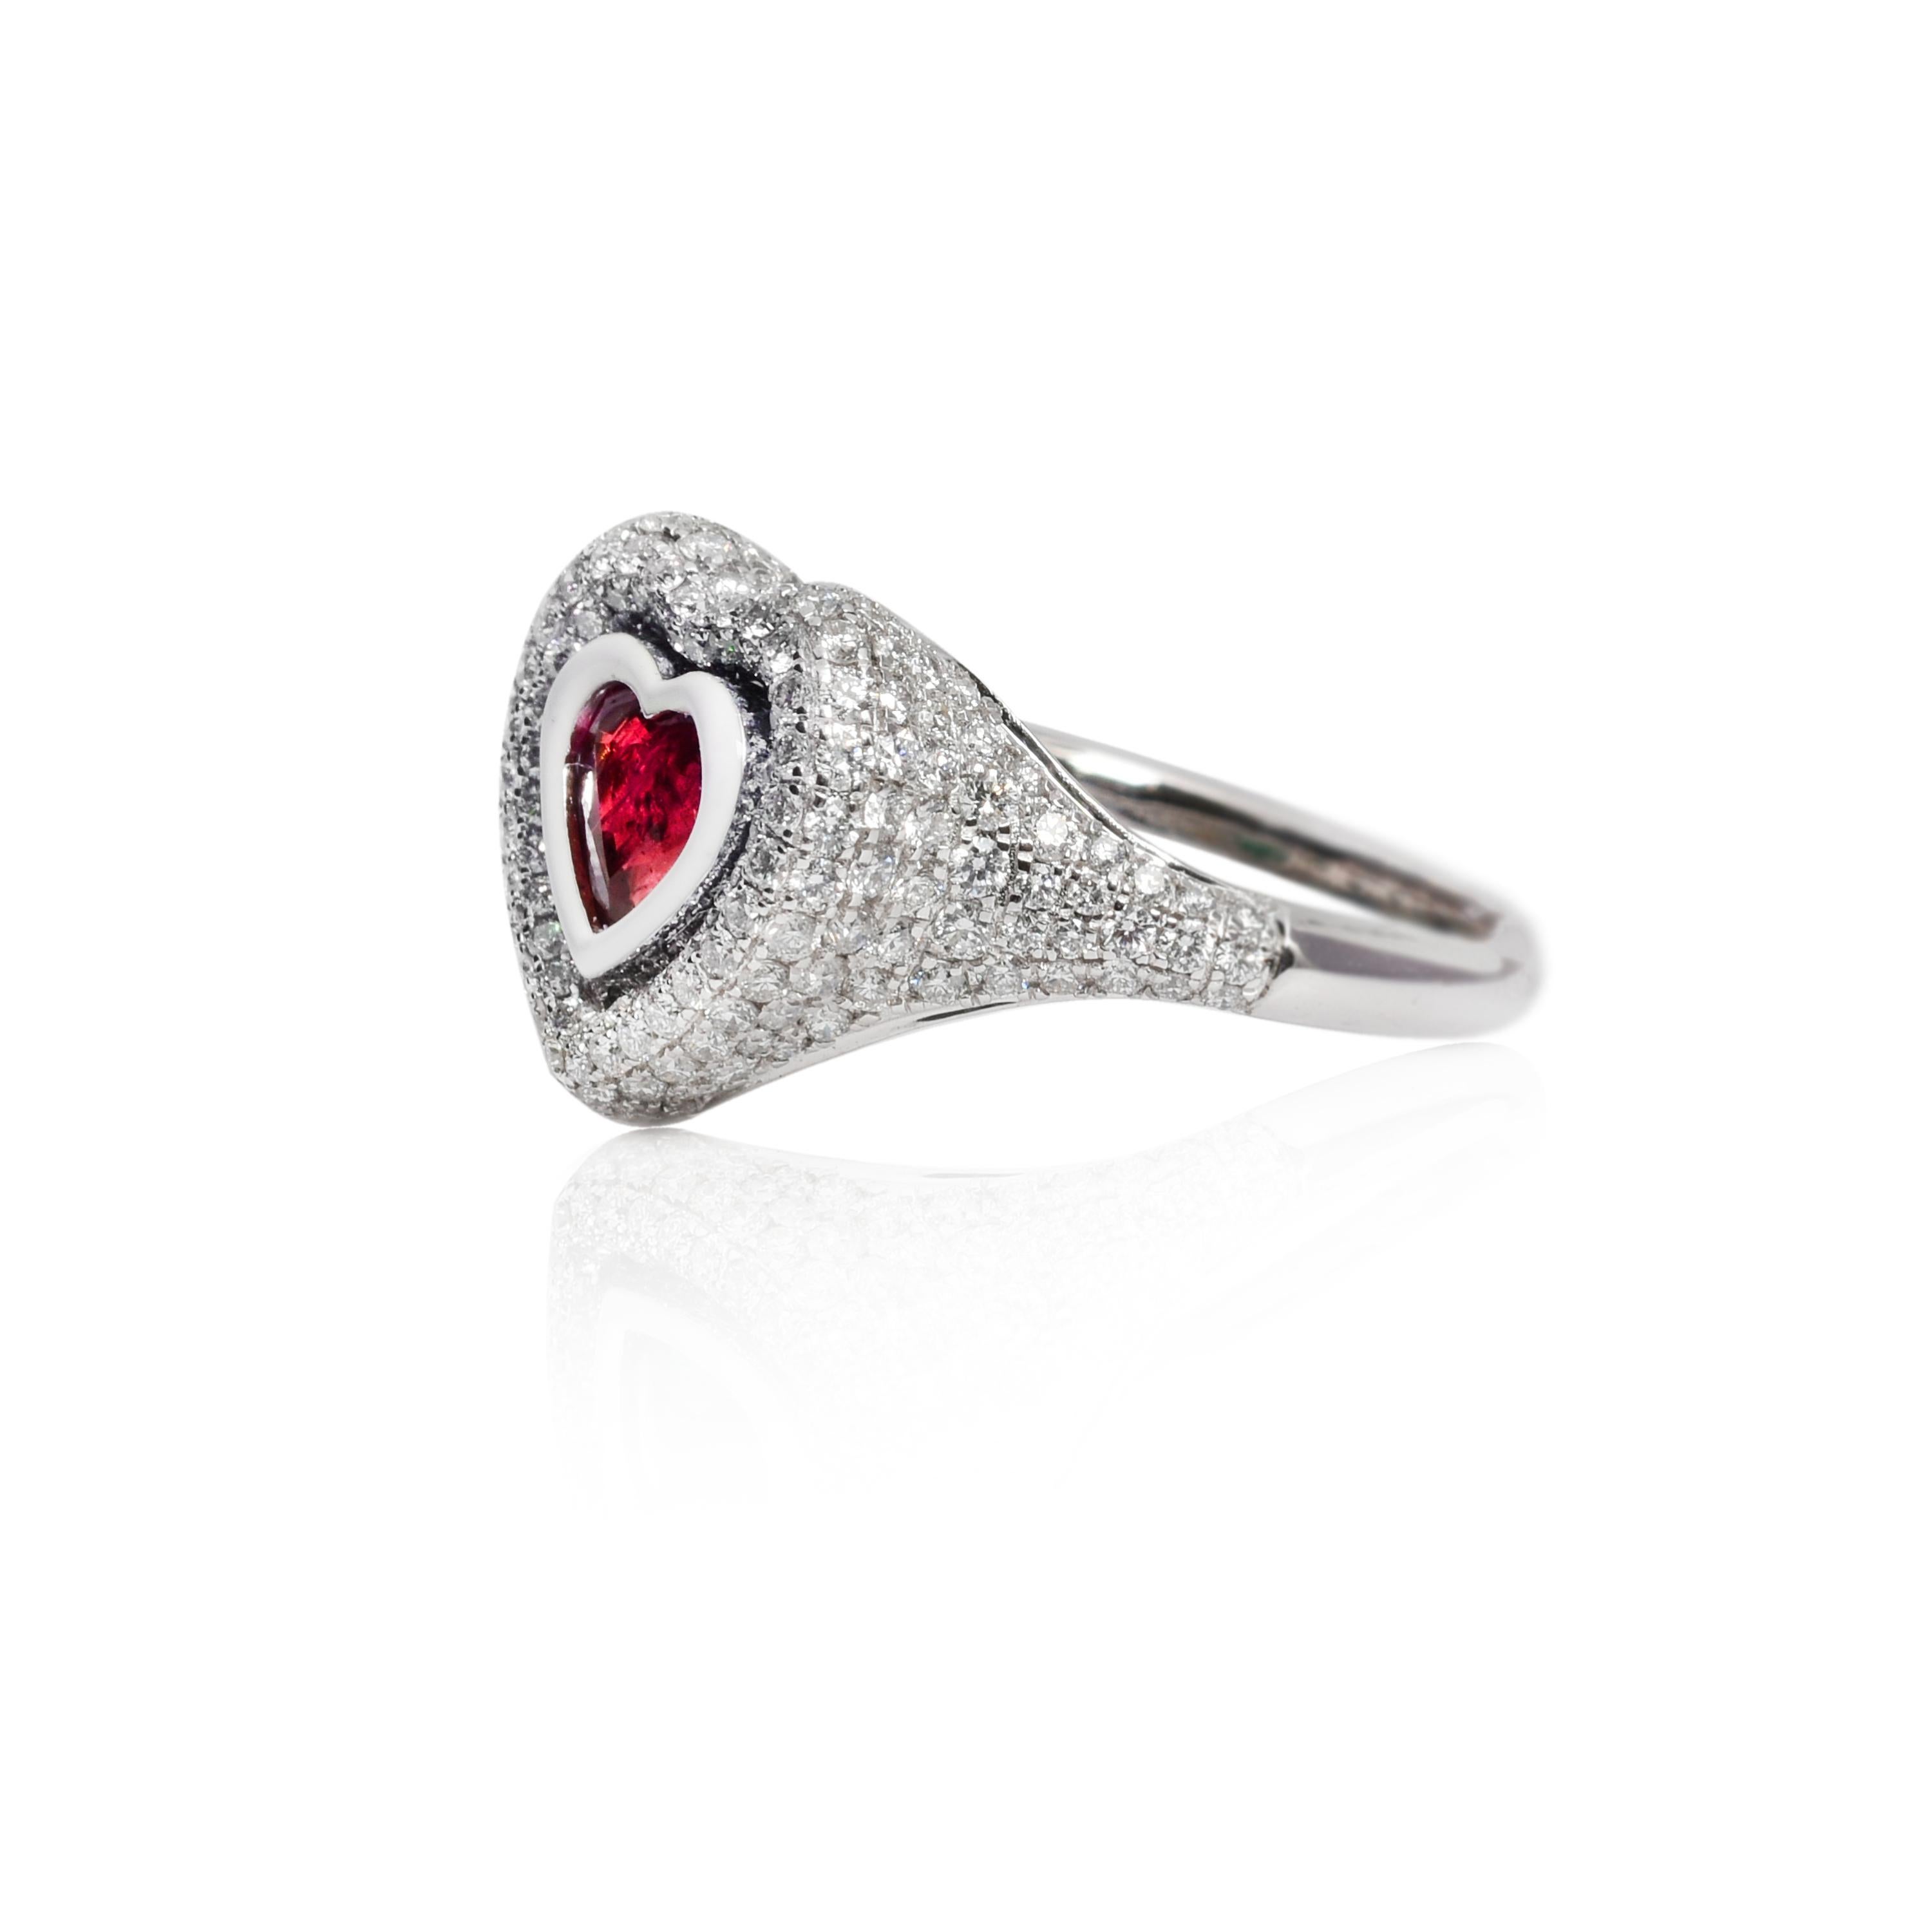 For Sale:  Kamyen, Heart Pinky Ring, Ruby Heart Cut, Fashion Ring 2